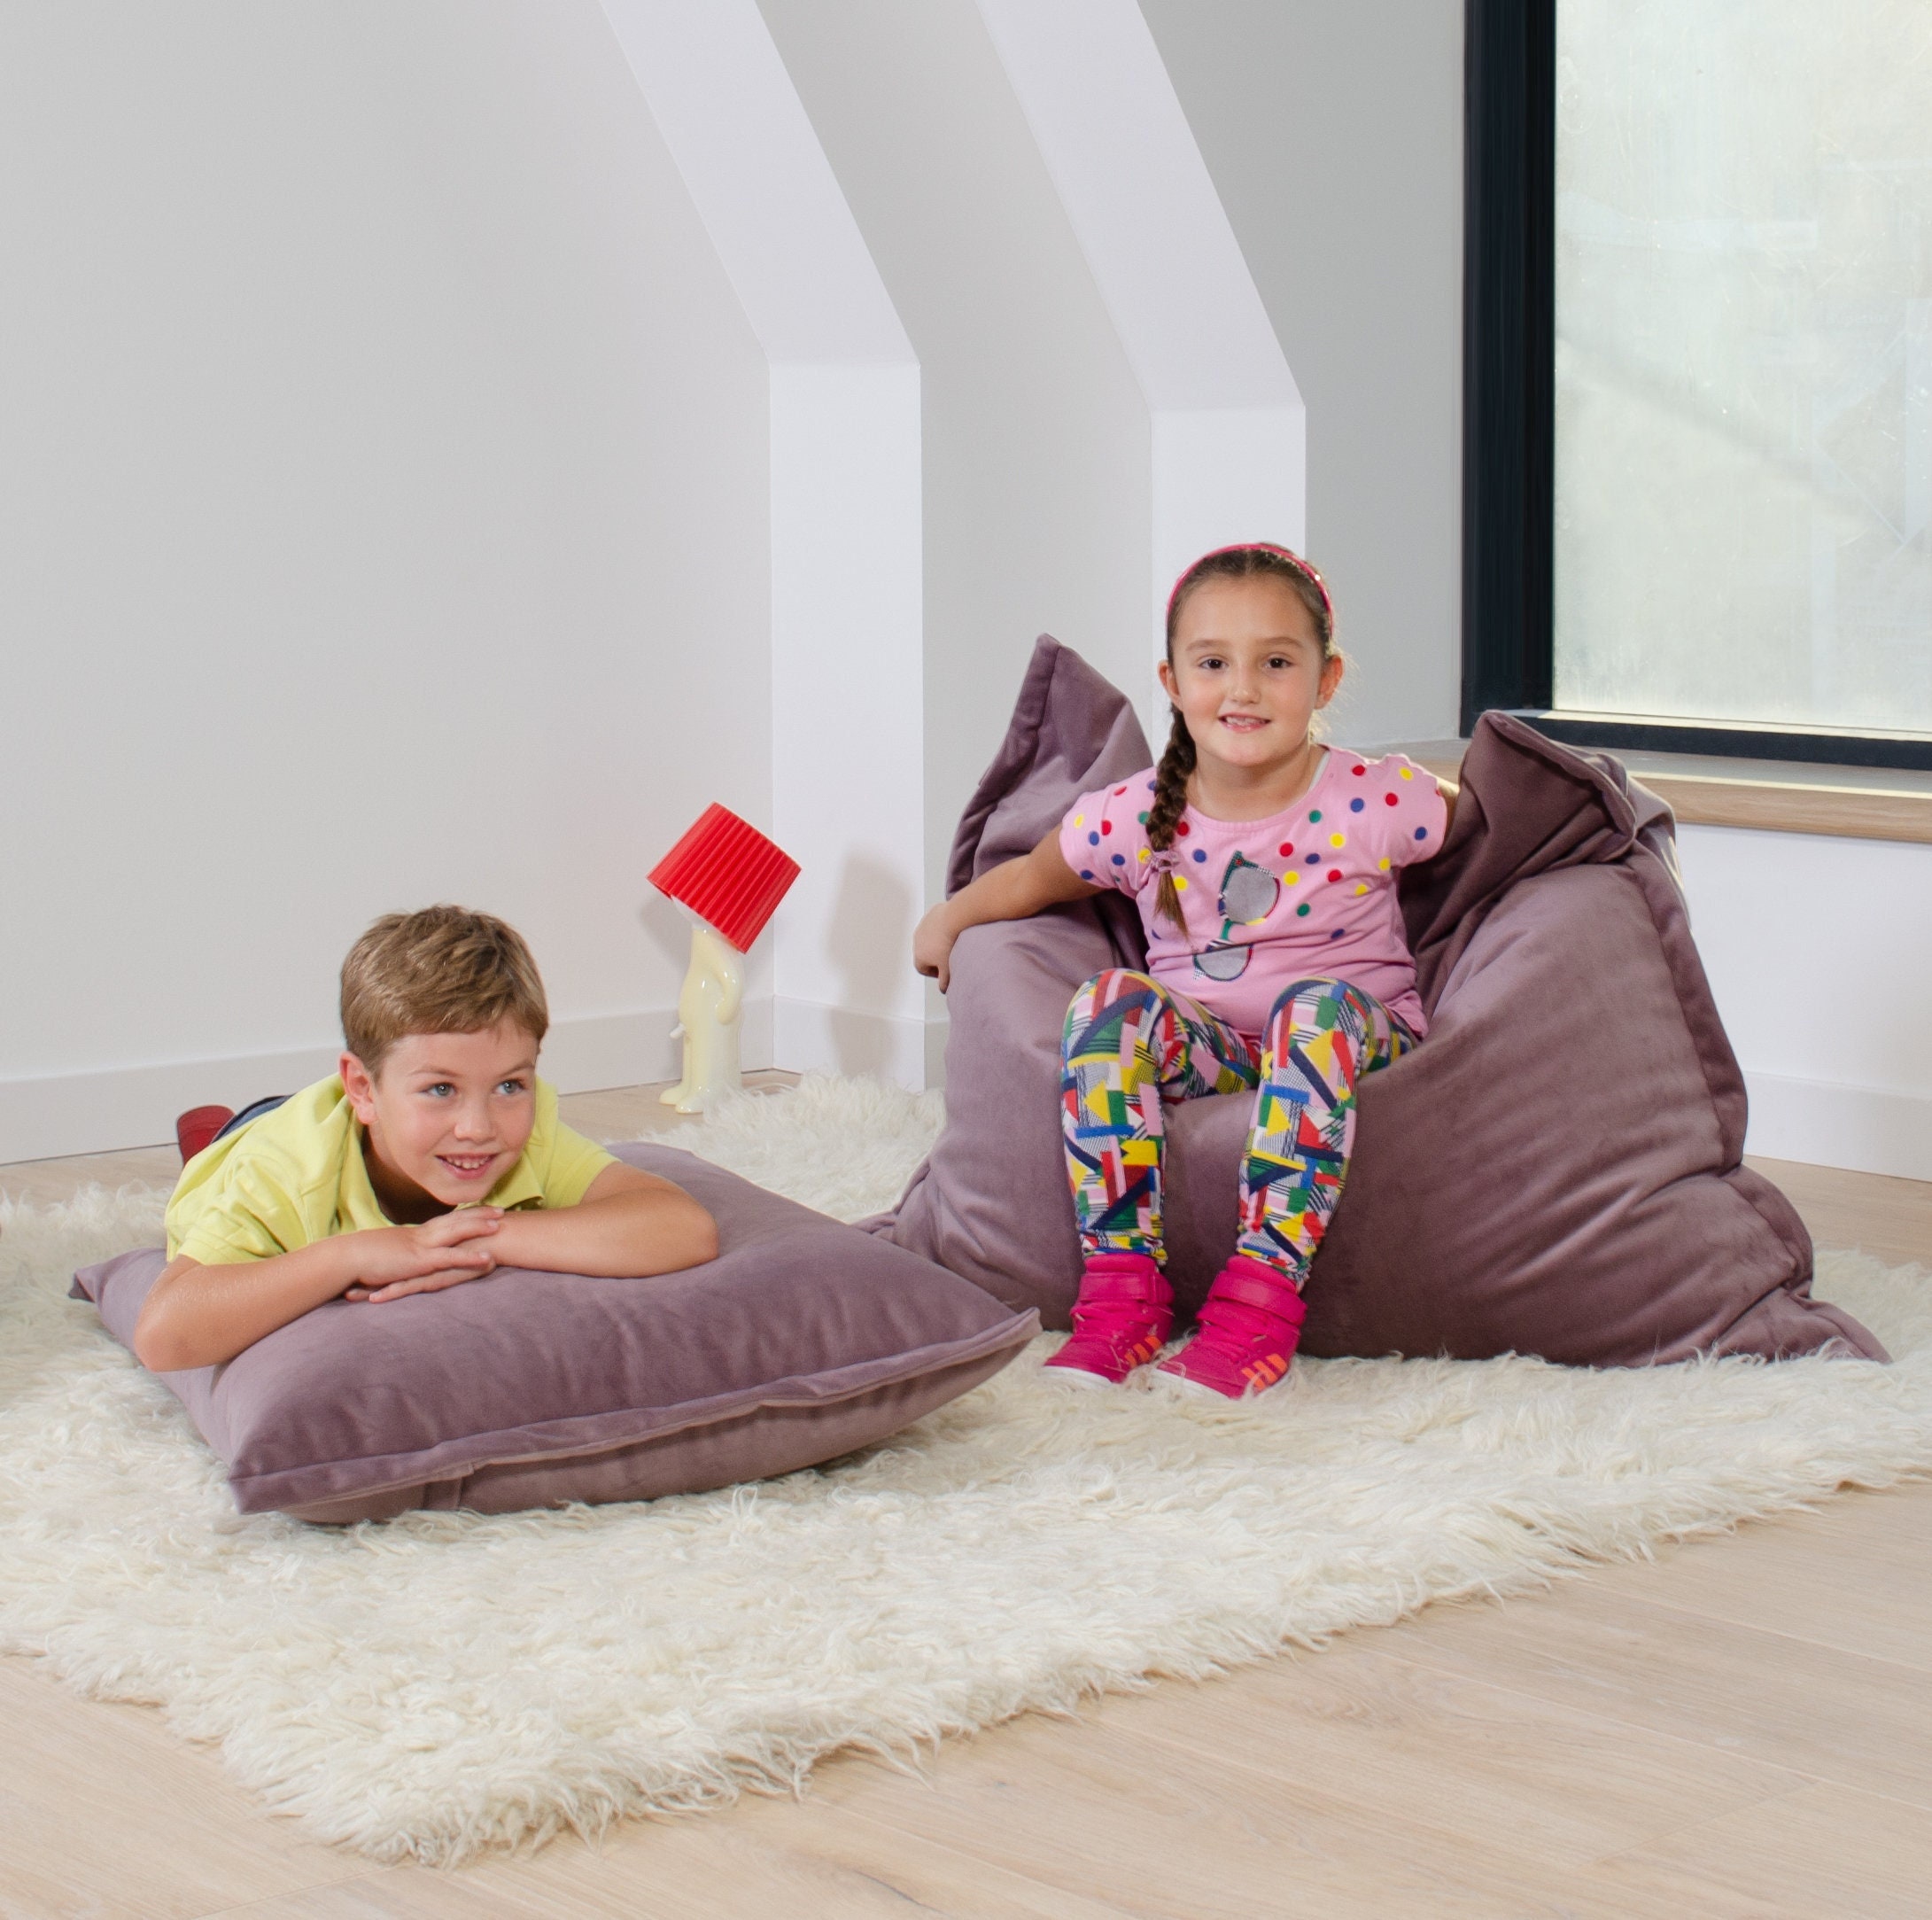 Chair With Filler Lazy Sofa Bean Bag Kids Filling Adults Bedroom Bean Bag  Sofa Fluffy Single Nordic Sitzsack Home Furniture - AliExpress